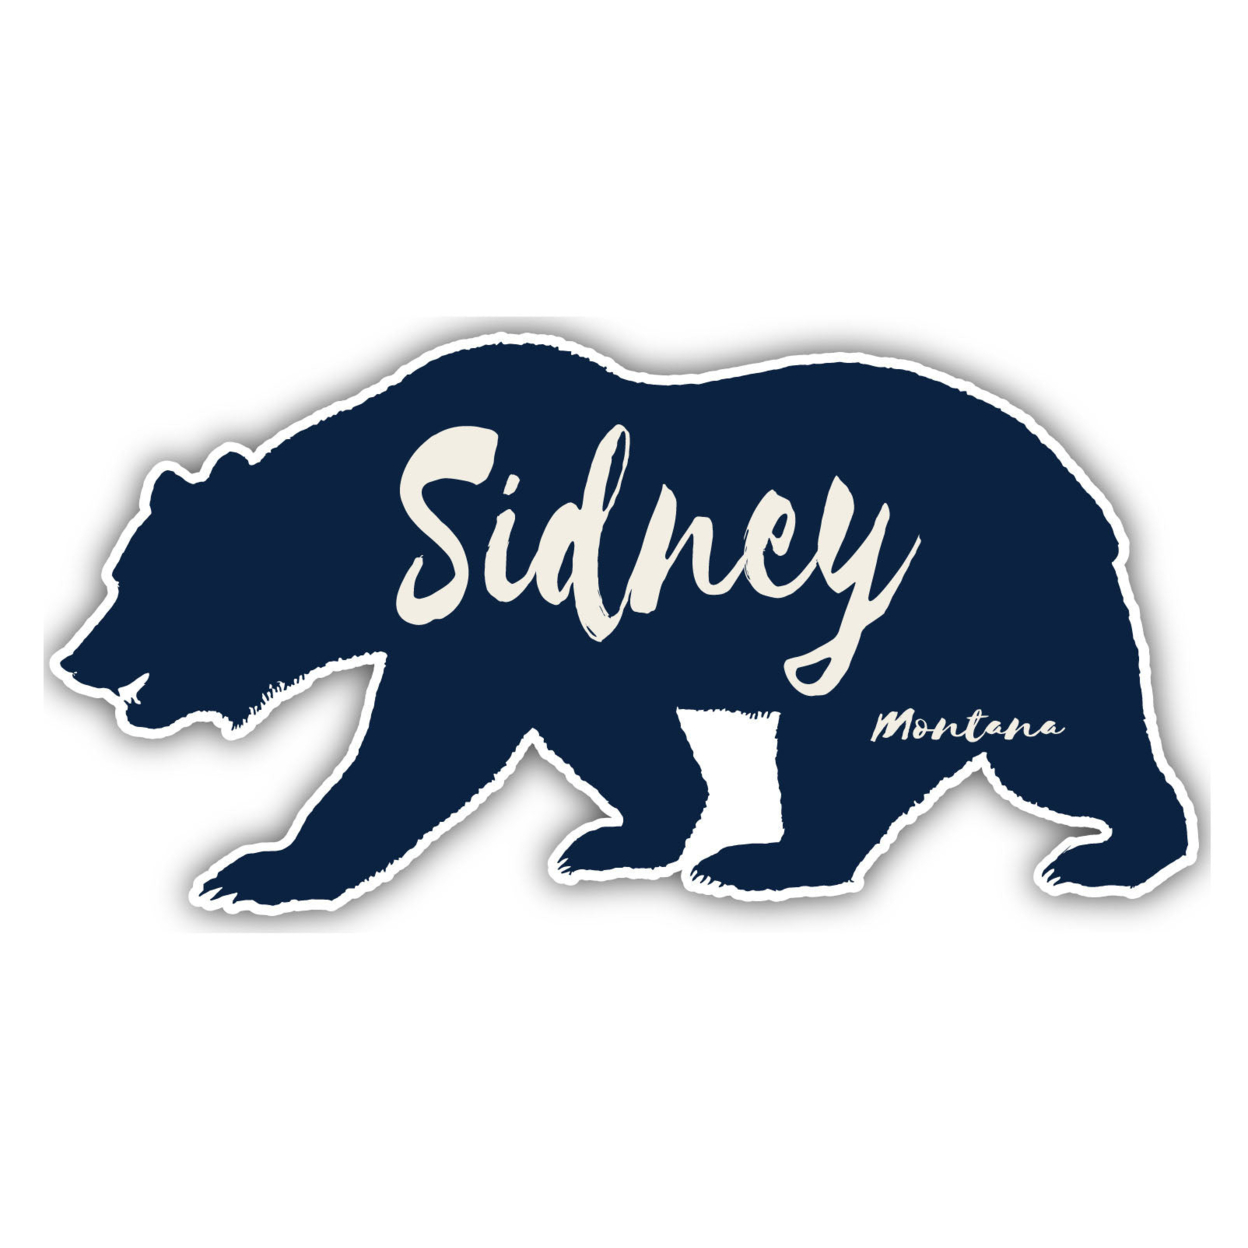 Sidney Montana Souvenir Decorative Stickers (Choose Theme And Size) - Single Unit, 2-Inch, Bear